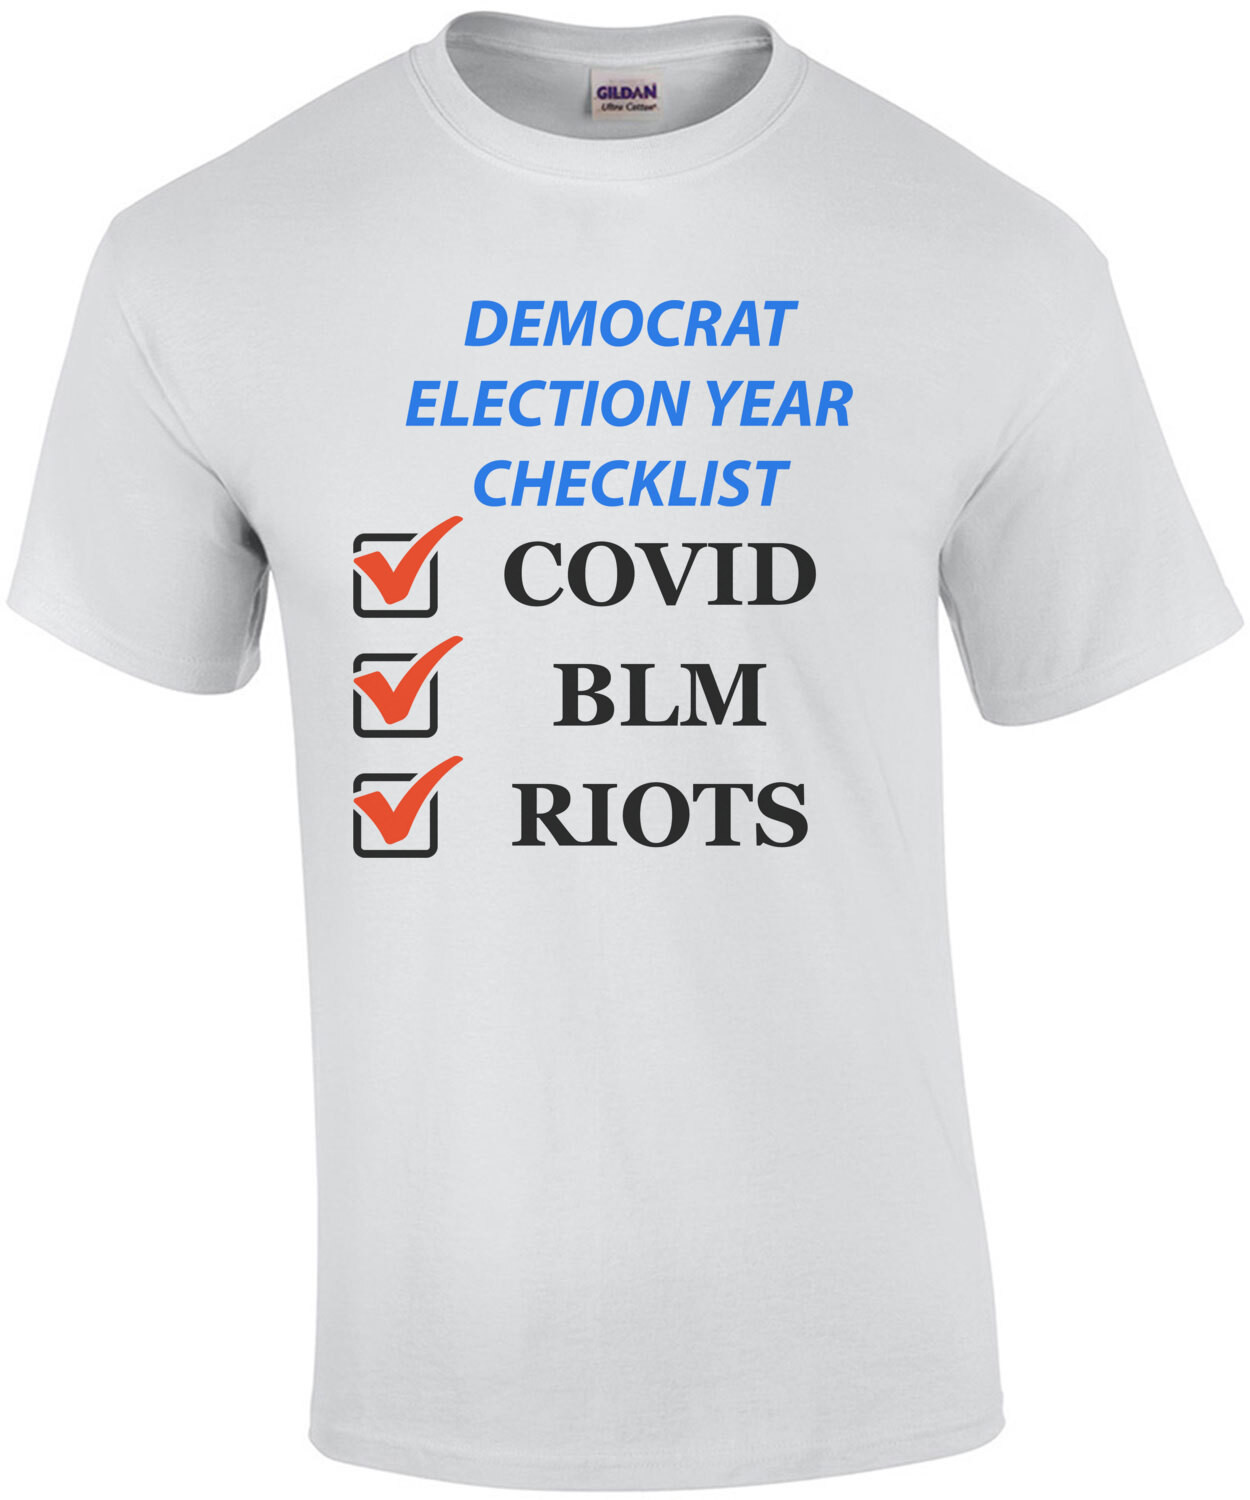 Democrat Election Year Checklist - Funny Political T-Shirt